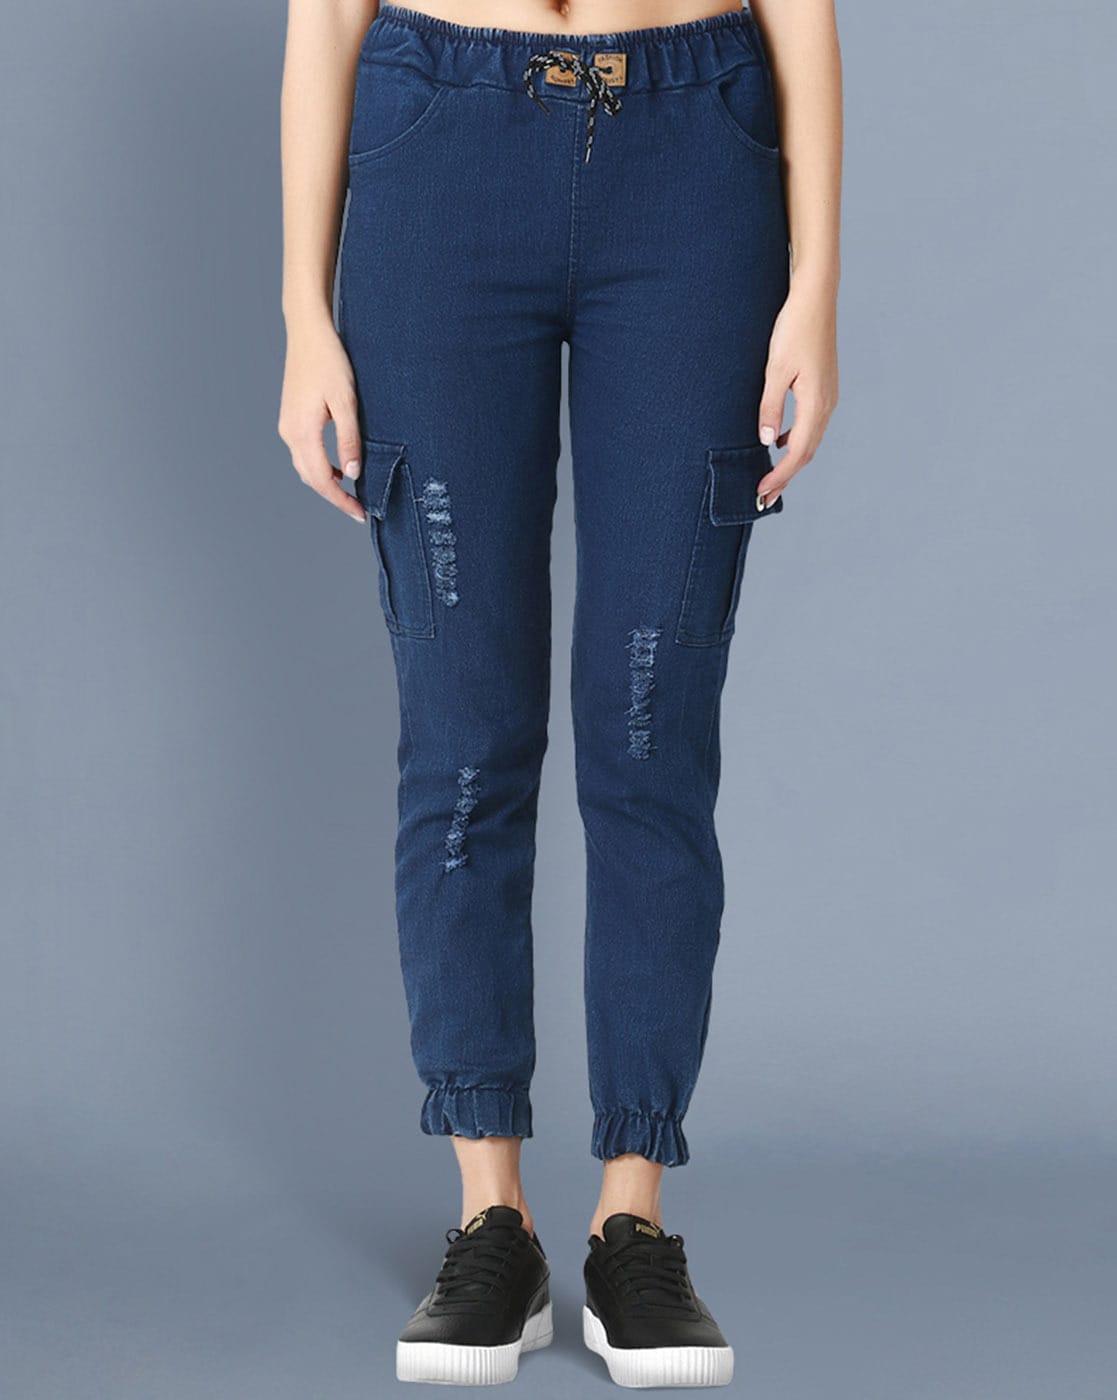 Buy Blue Jeans & Jeggings for Women by BUYNEWTREND Online